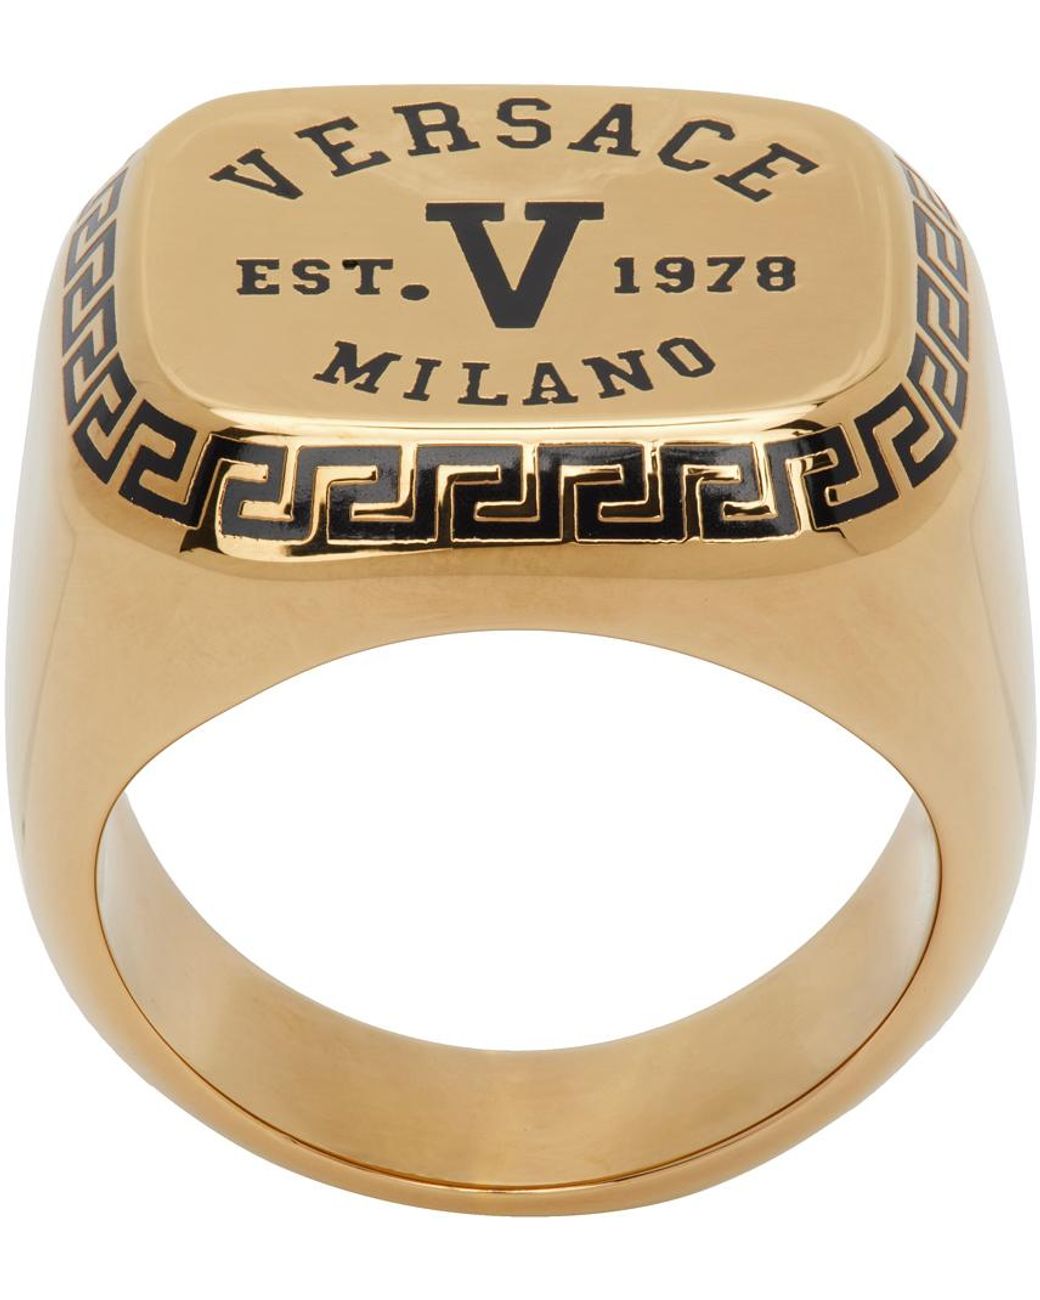 Versace Greek Keys Ring in Metallic for Men | Lyst